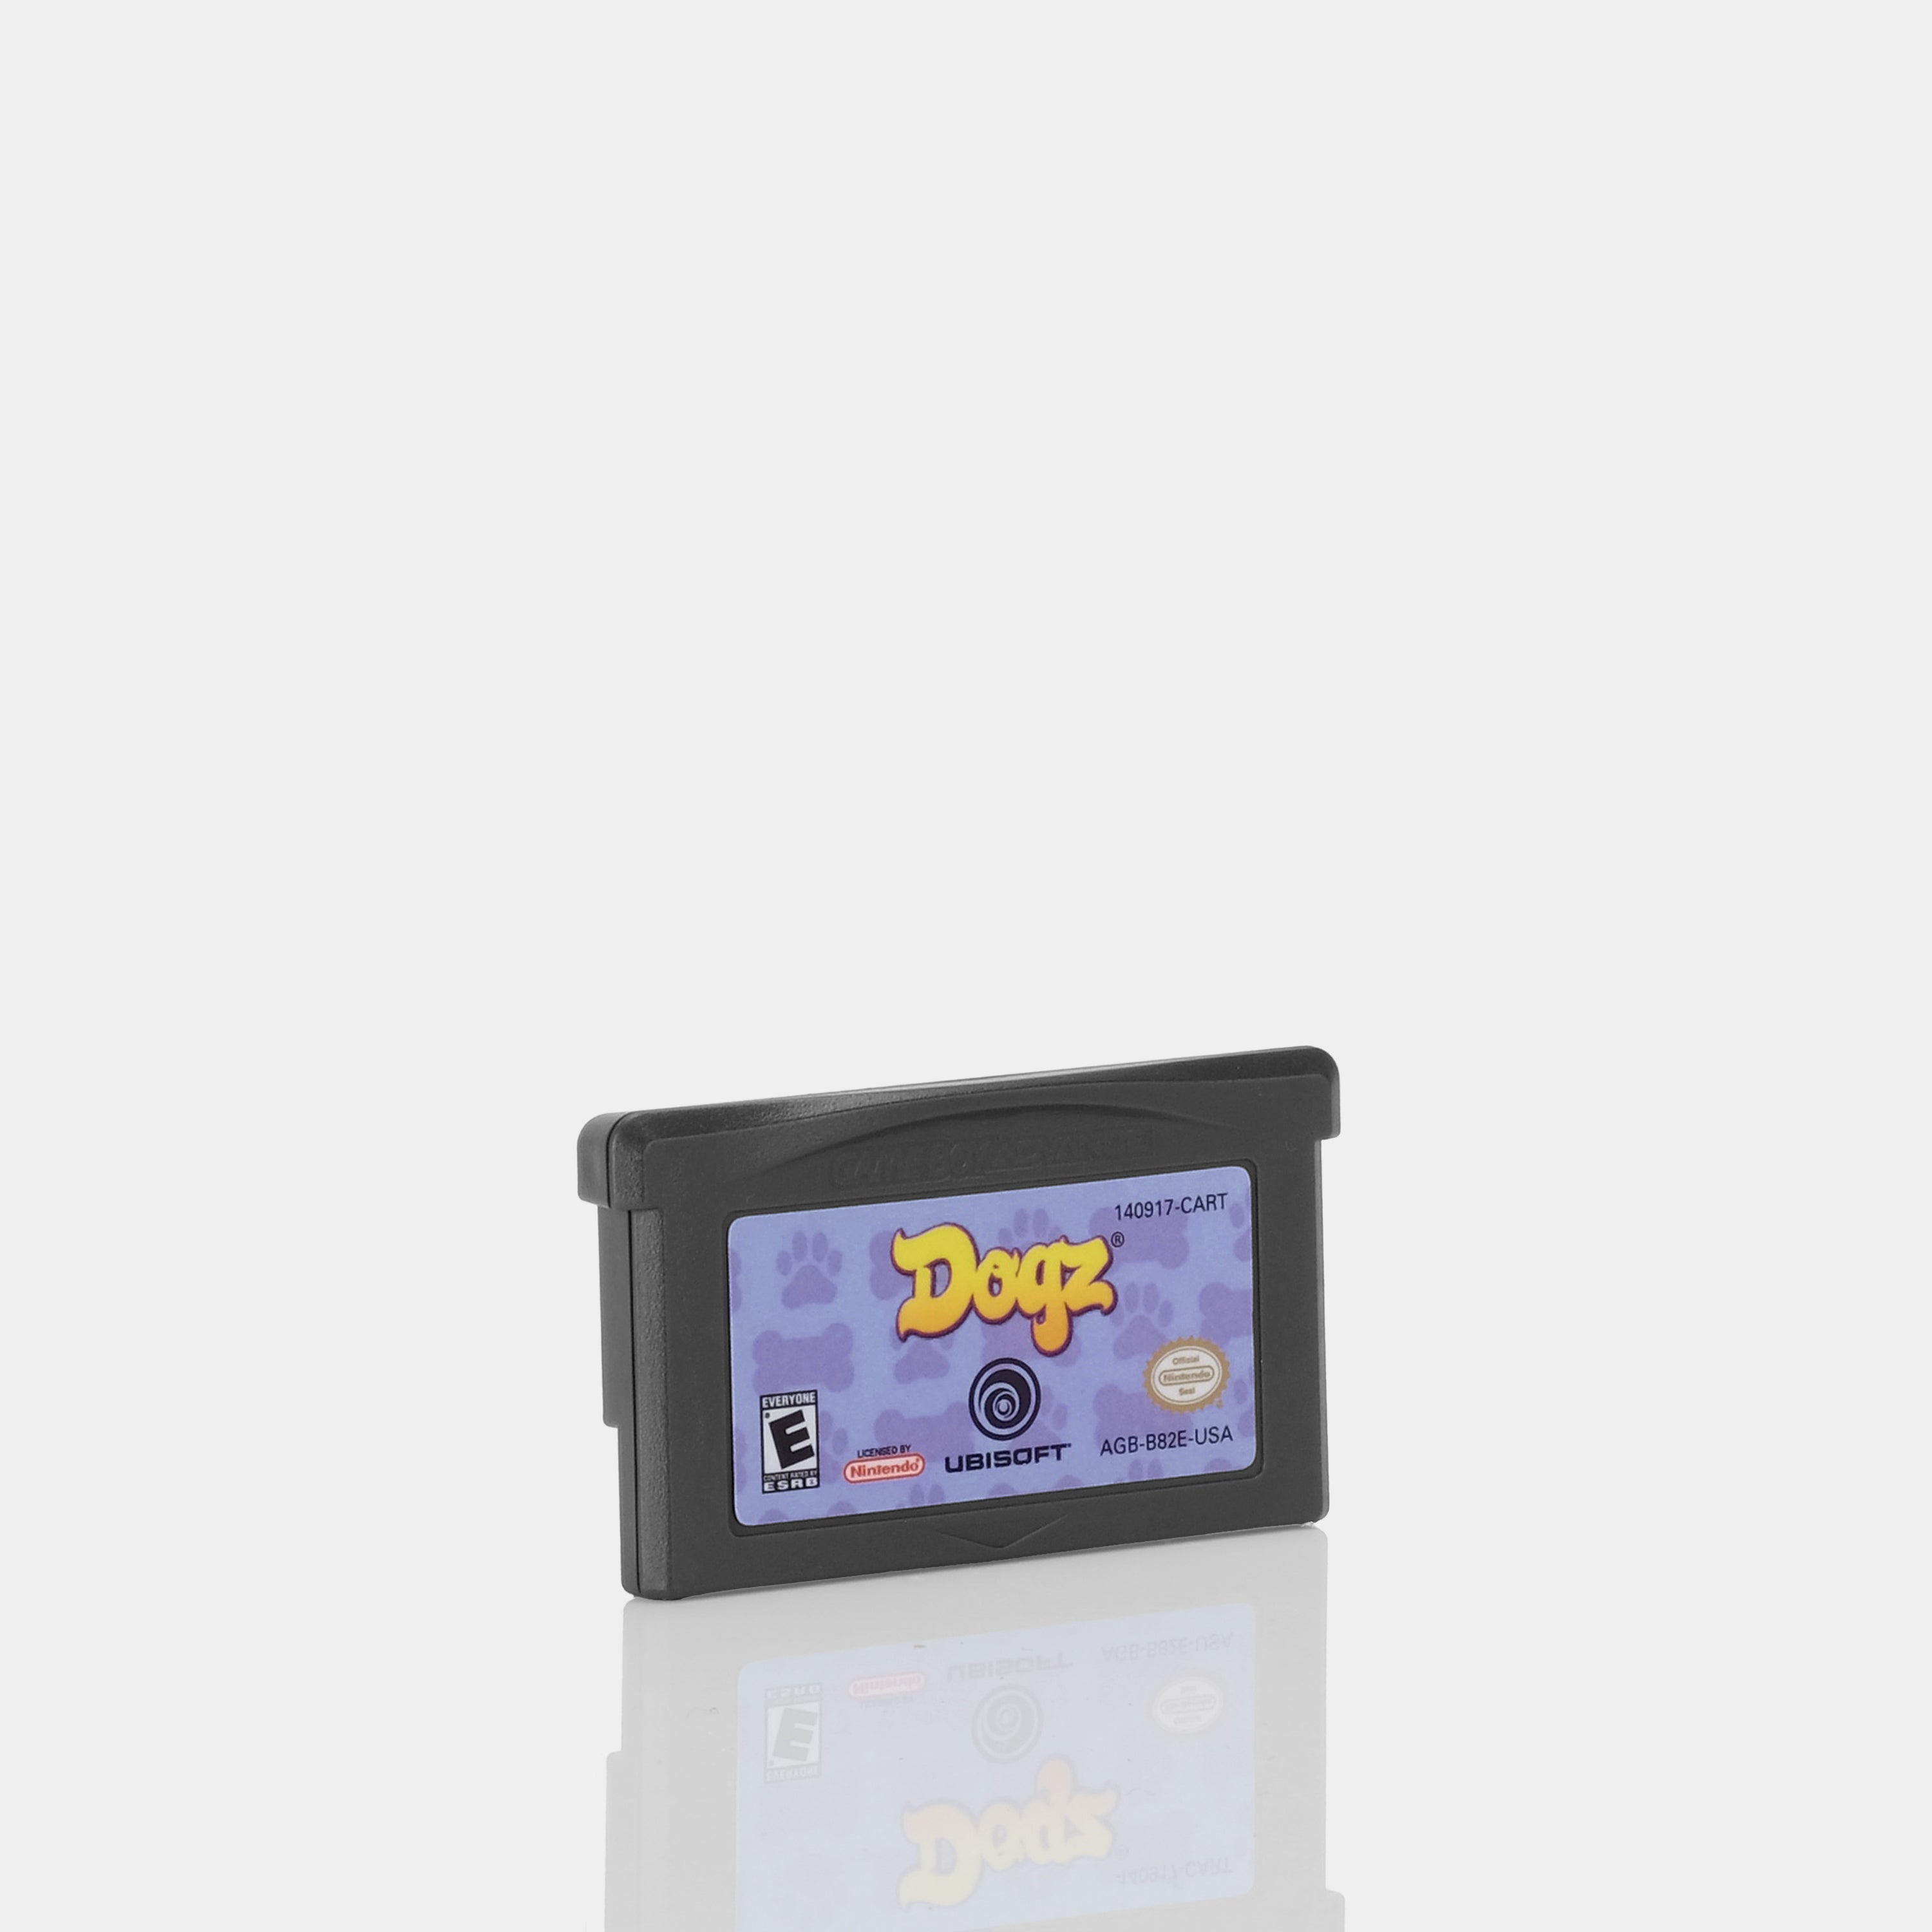 Dogz Game Boy Advance Game